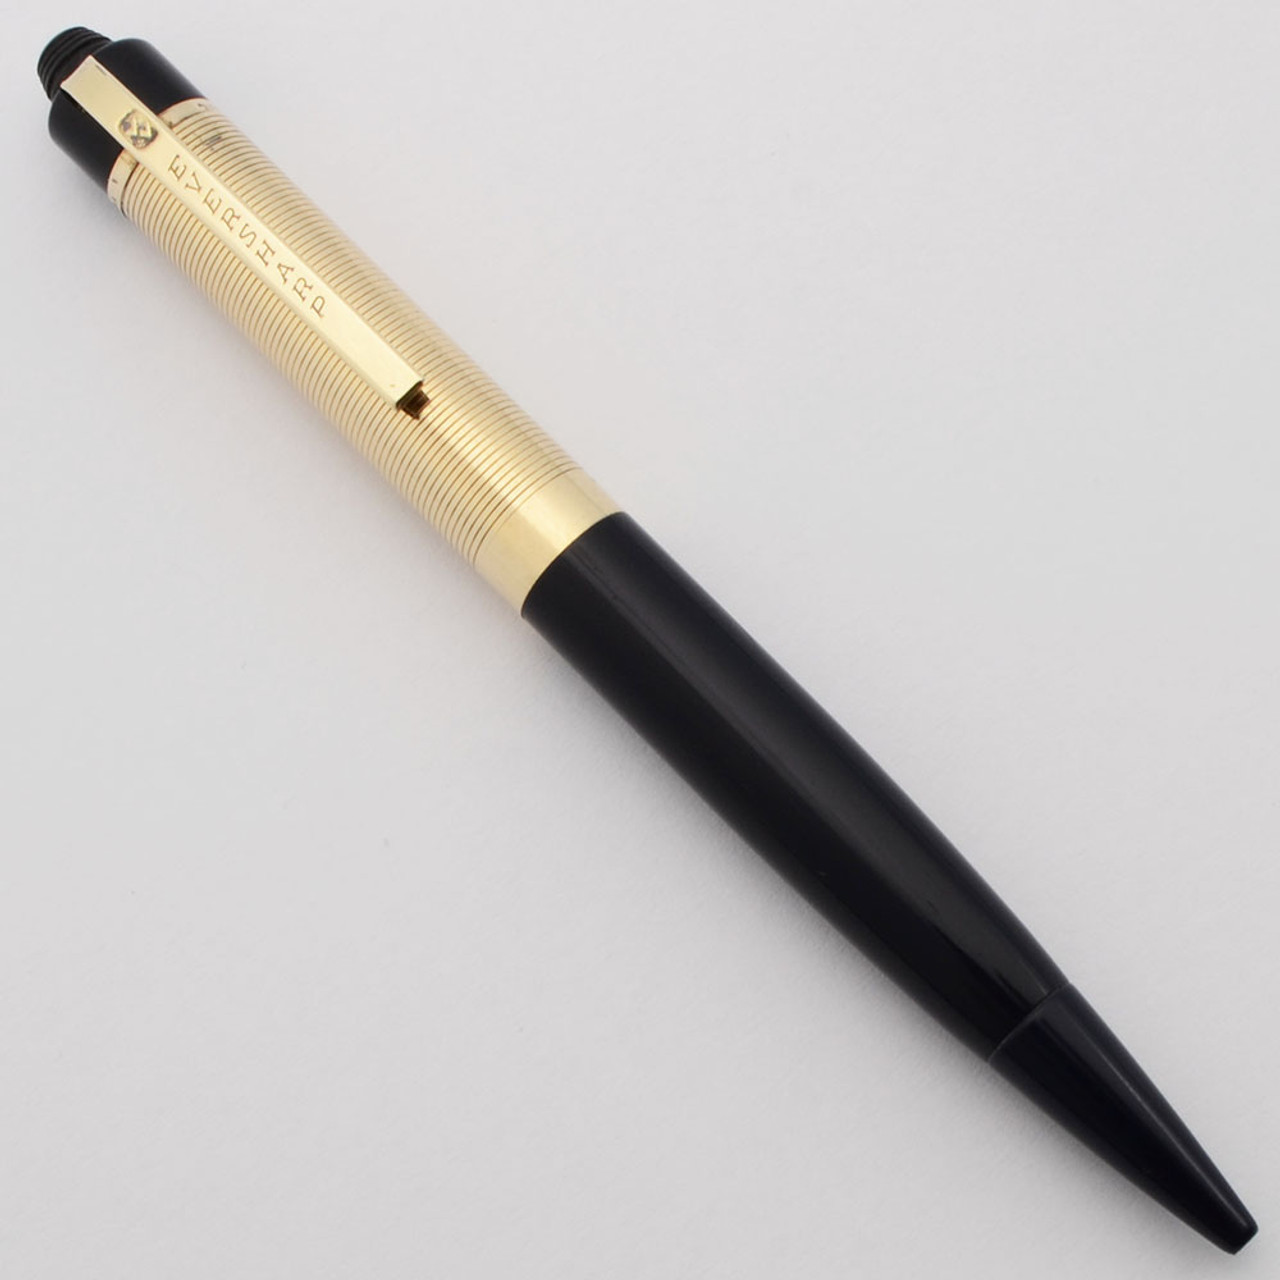 Eversharp Skyline Demi Mechanical Pencil (1940) - Dark Blue, YGF Cap, 1.1mm Leads (Excellent, Works Well)